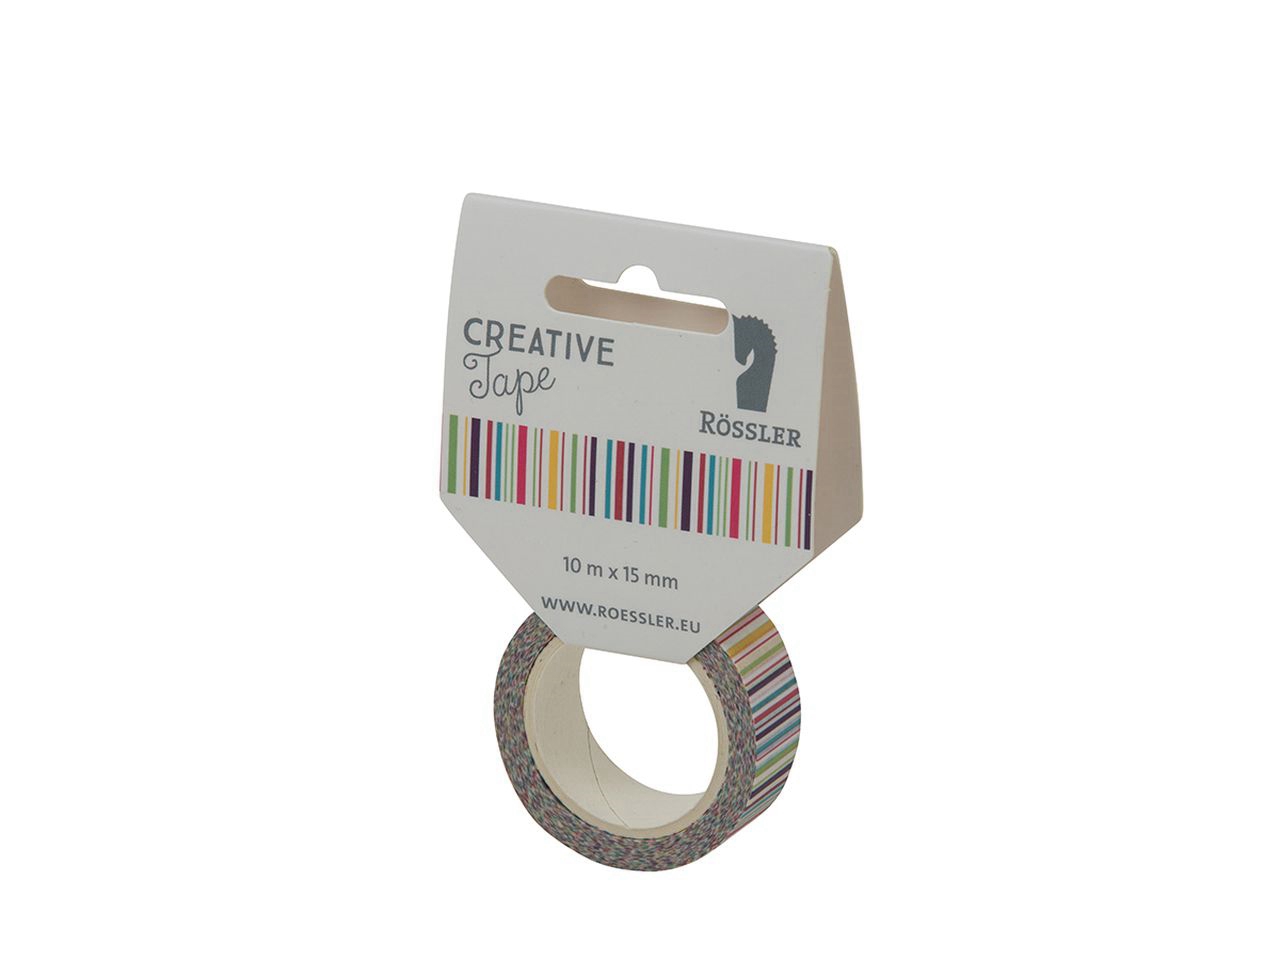 Creative Tape adesivo 10m x 15mm